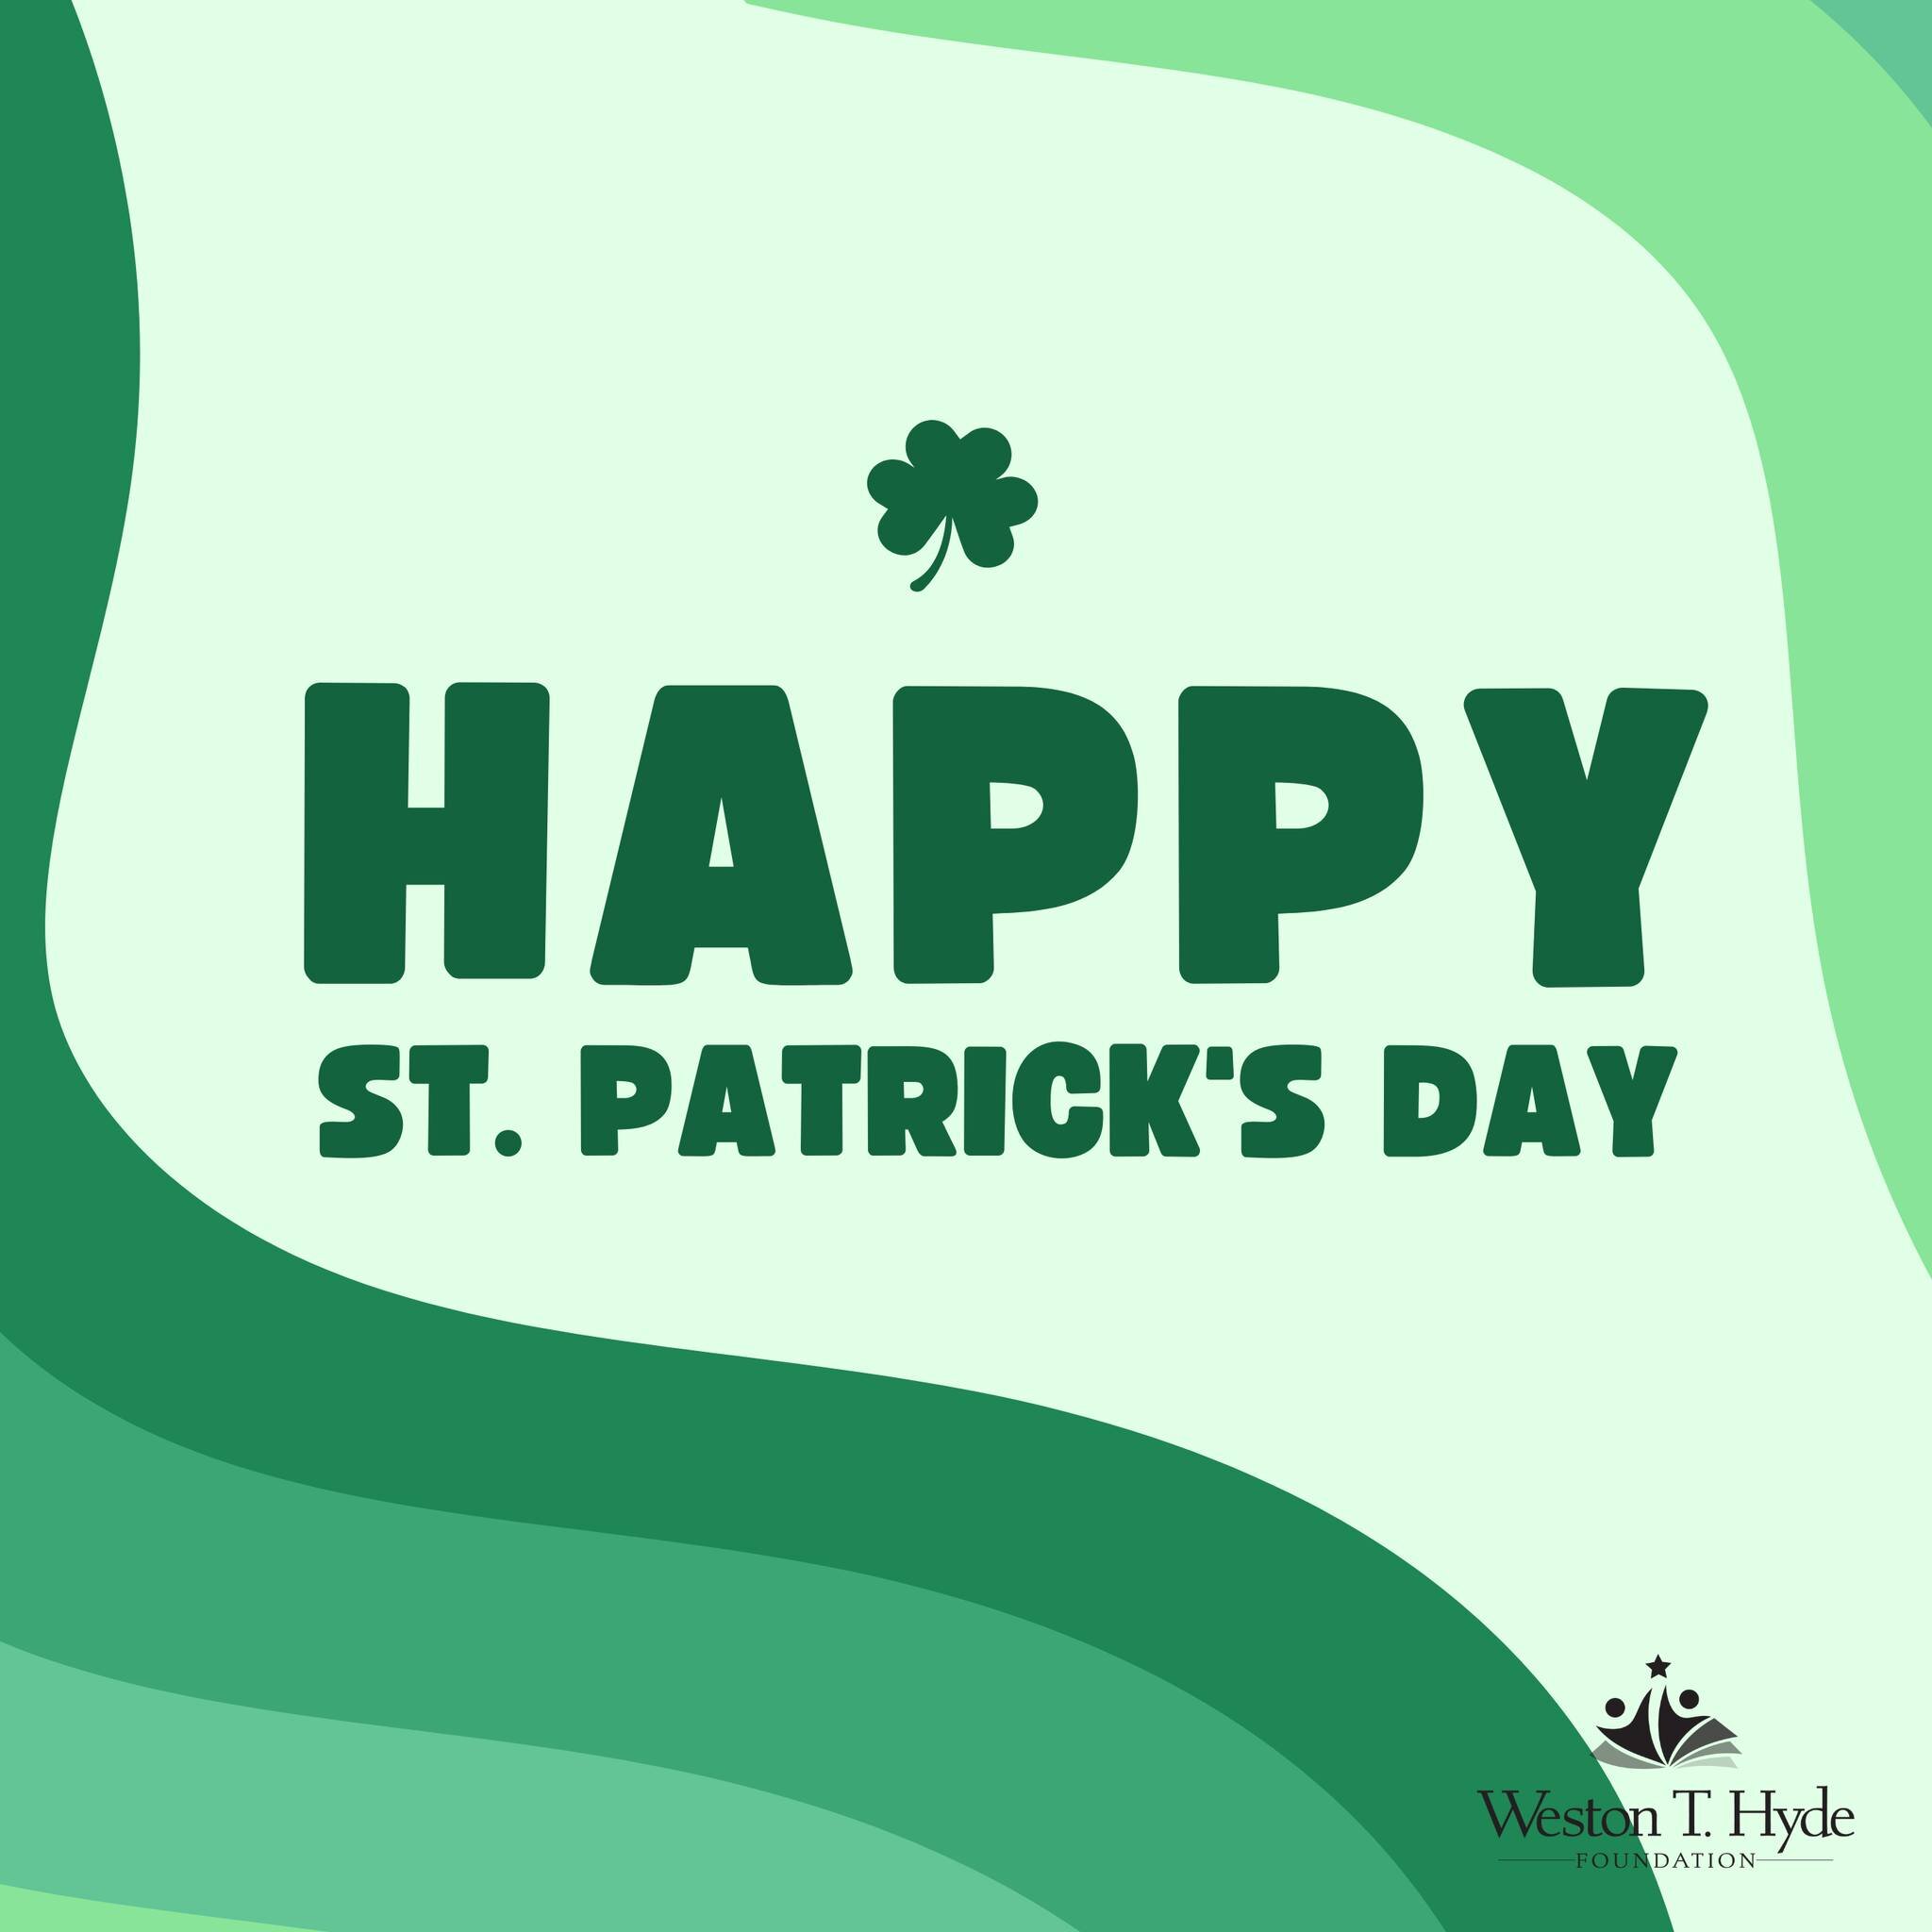 Happy St. Patrick's Day! ☘️